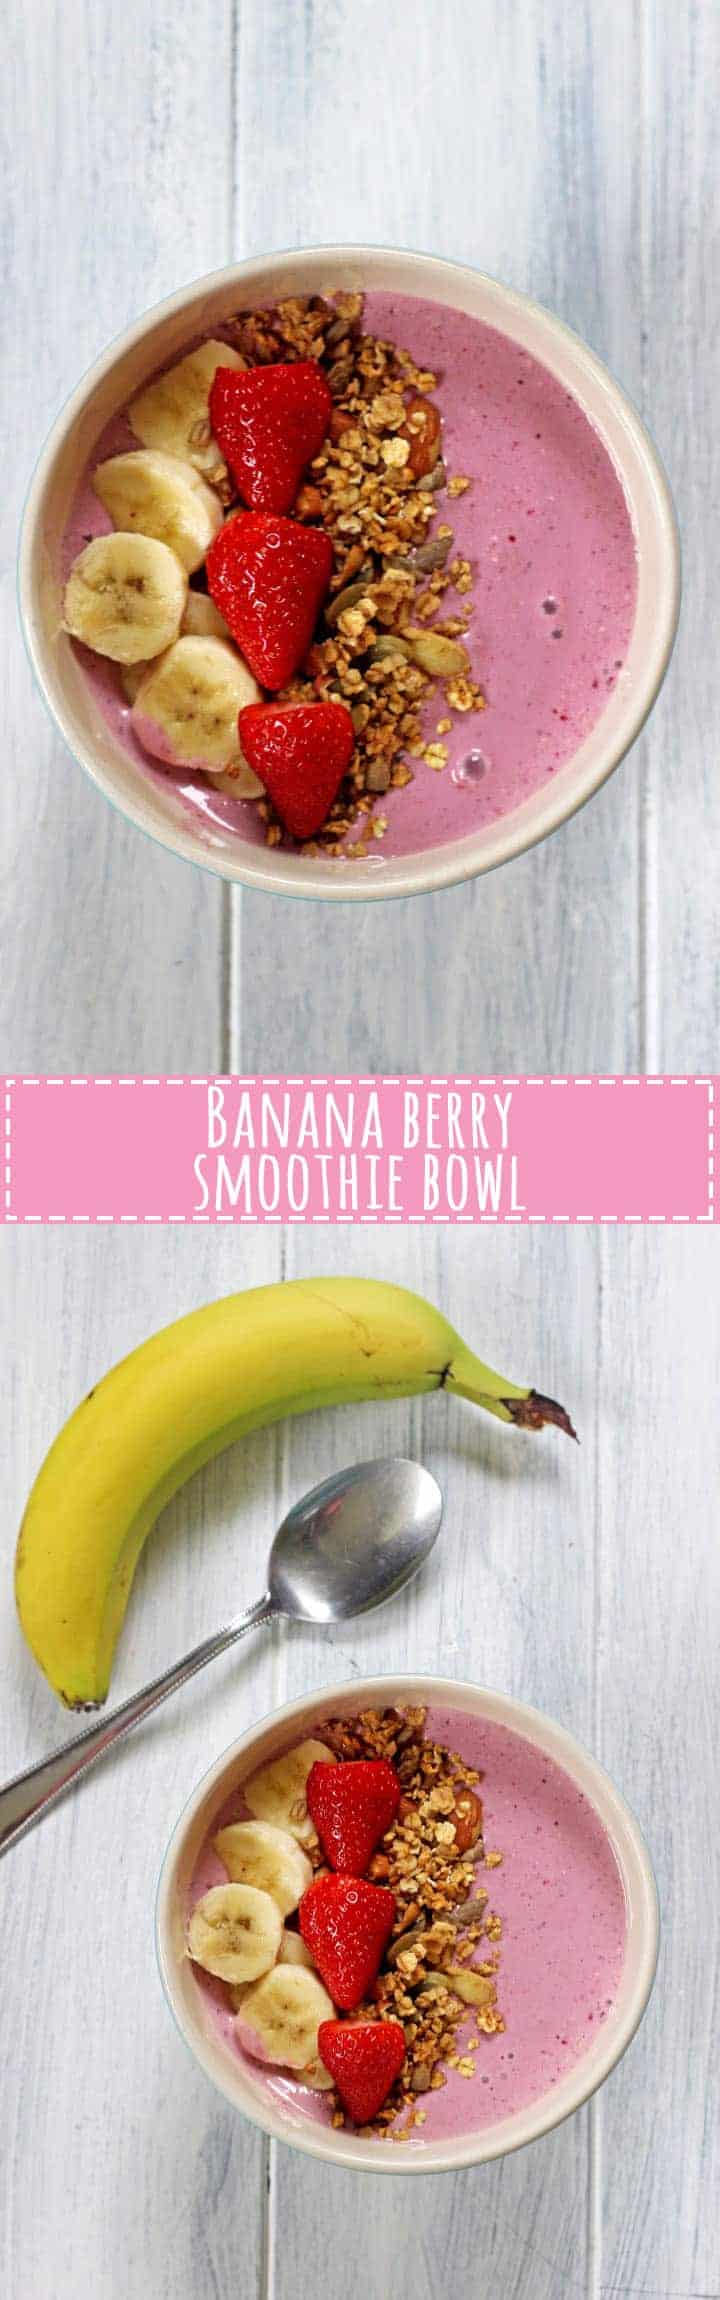 Banana Berry Smoothie Bowl |Fresh, fruity, cold & refreshing!| Recipe at thekiwicountrygirl.com